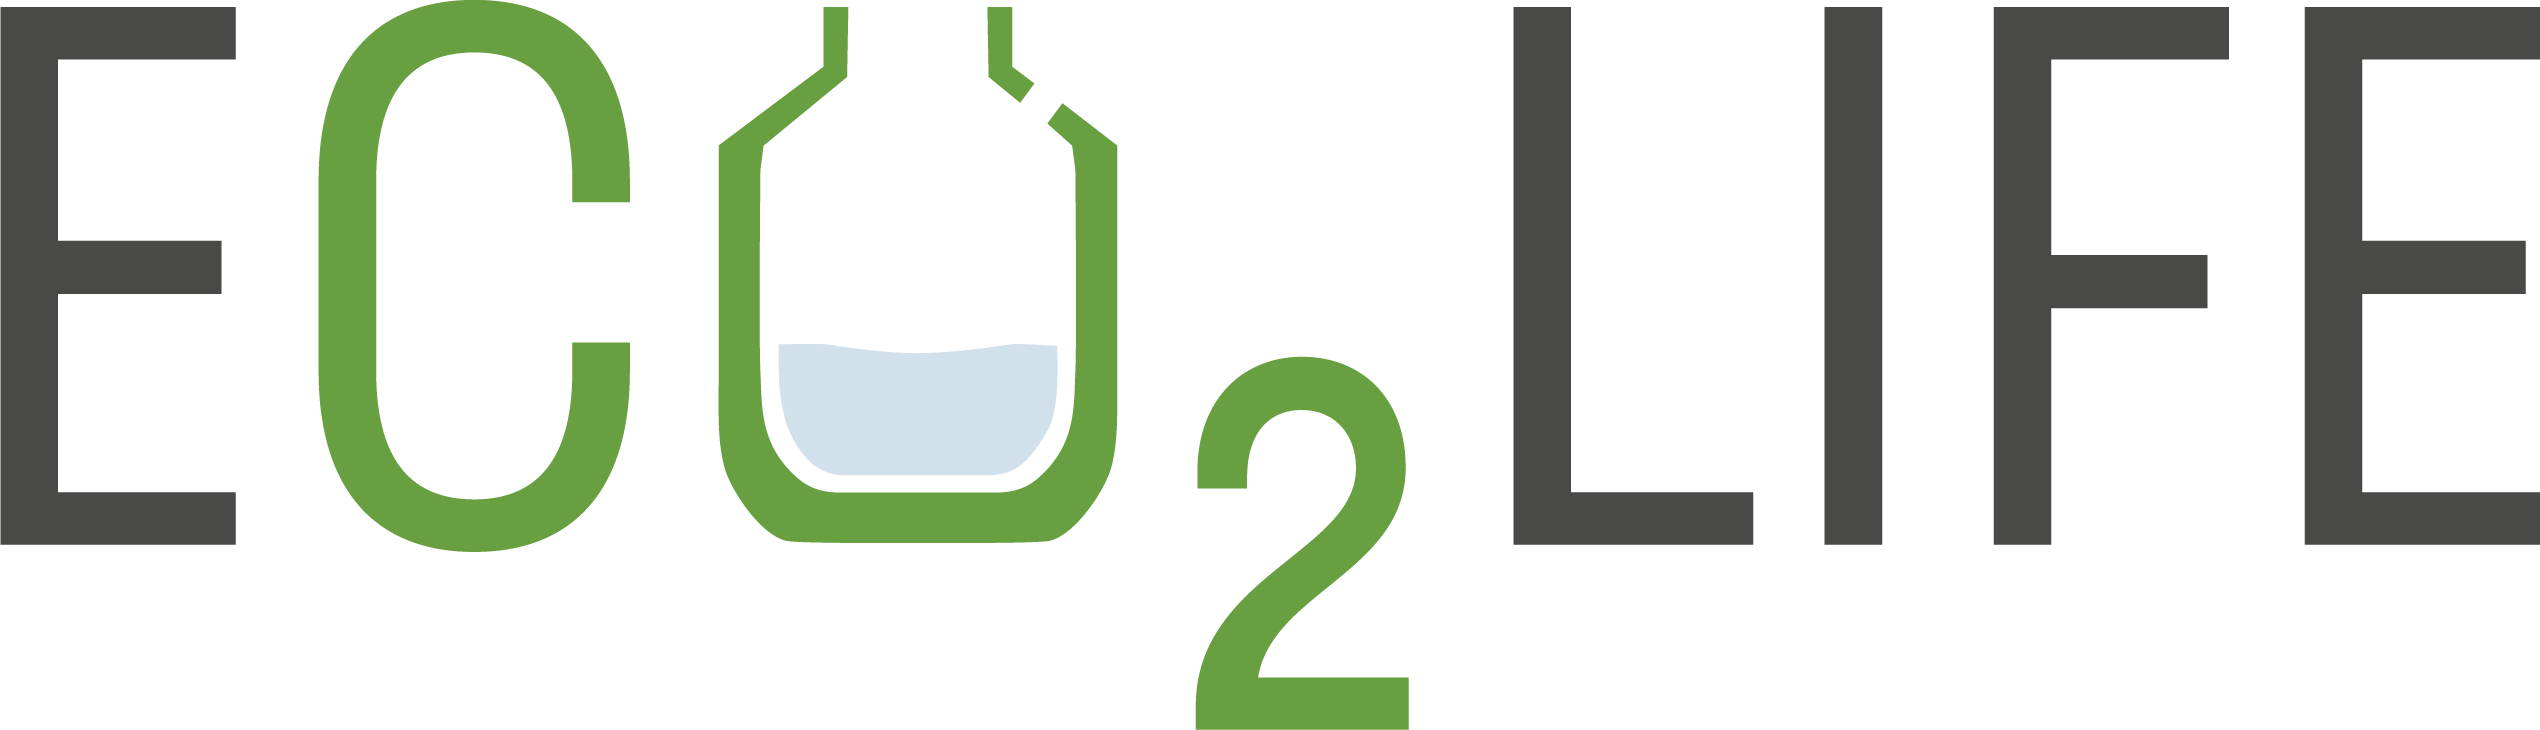 ECO2LIFE project logo